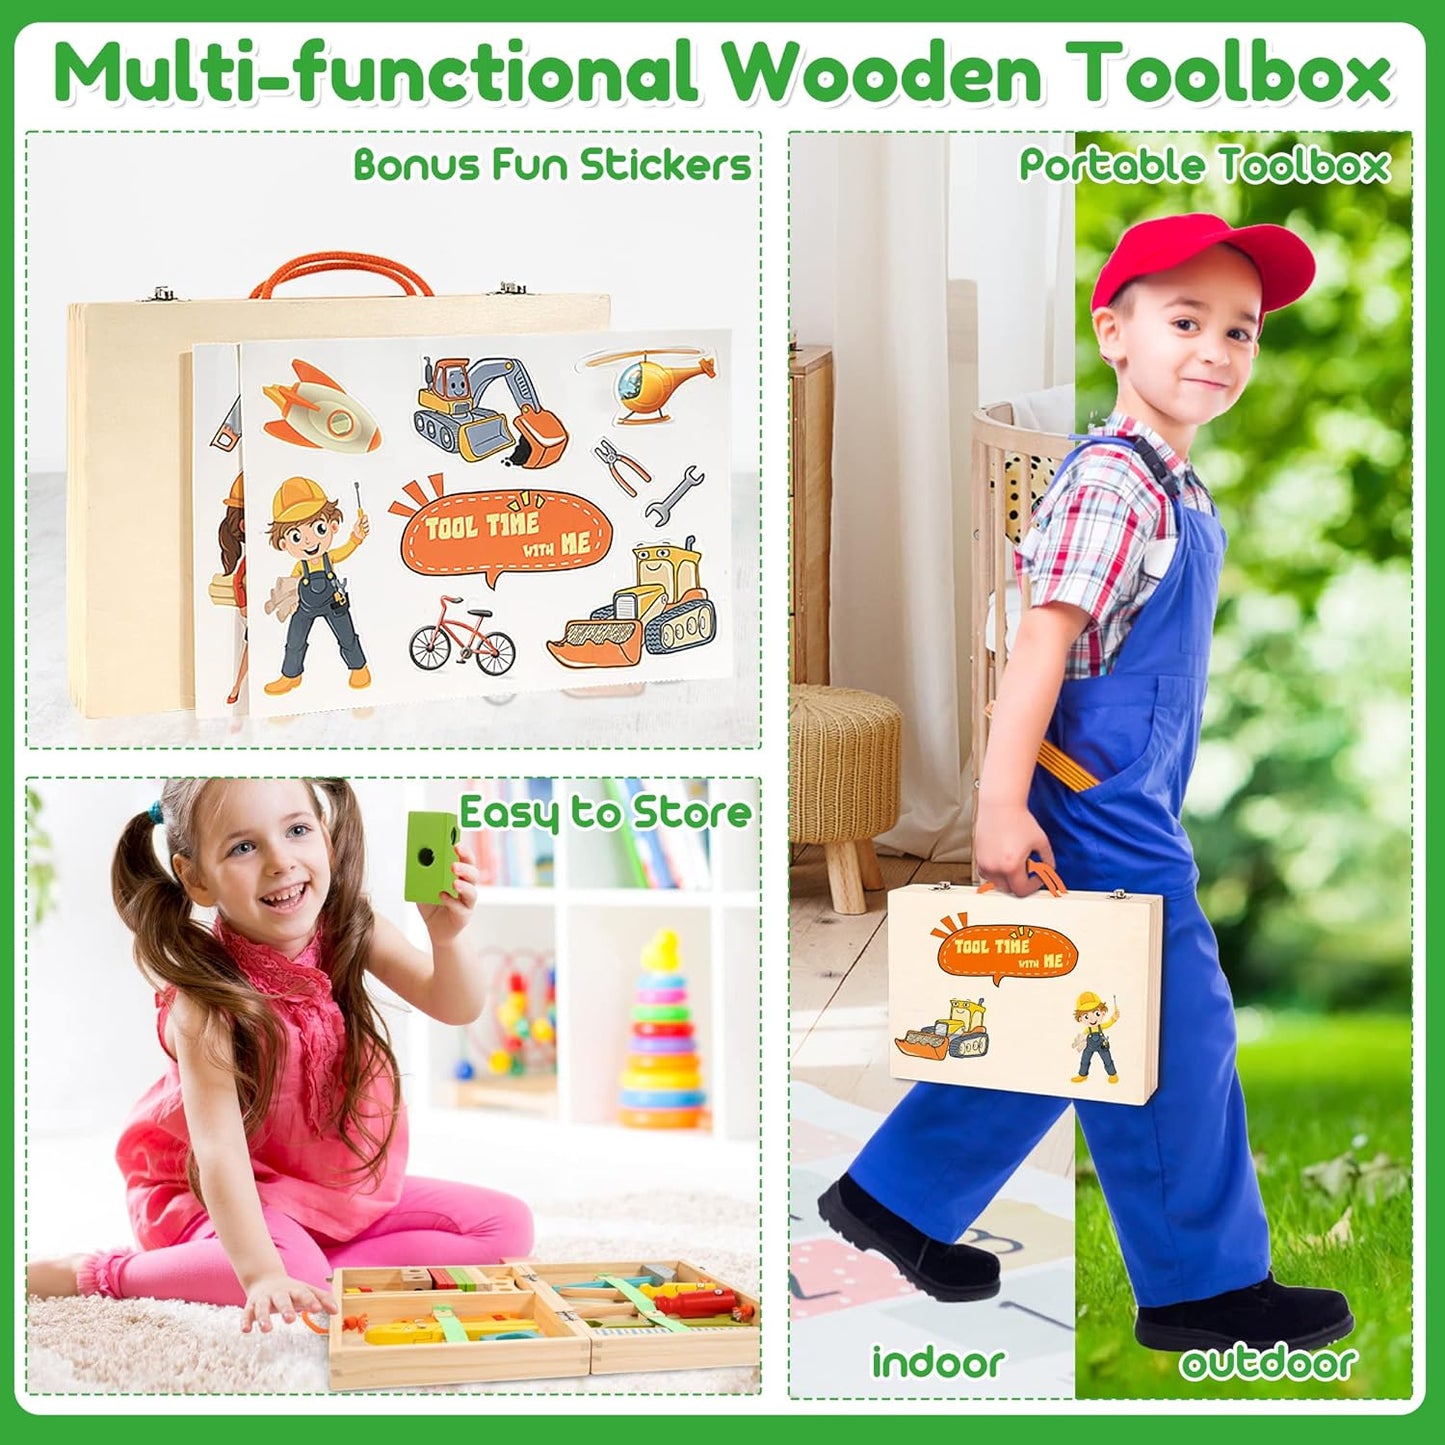 Bravmate Wooden Building Block Set, 37 Pieces, Multicolor, Toddler, Kid